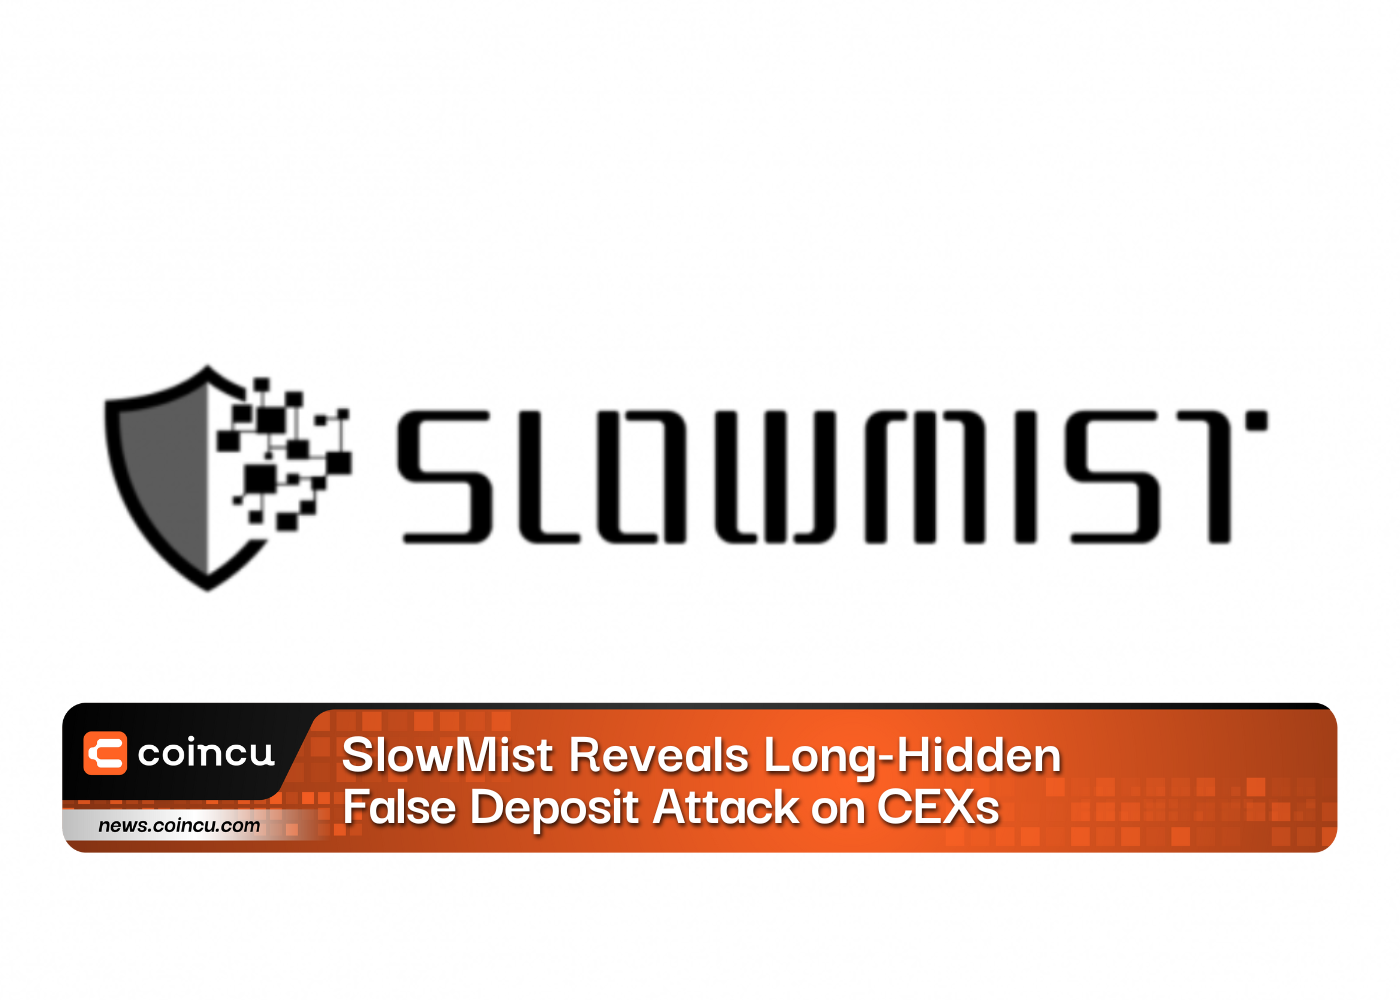 SlowMist Reveals Long Hidden